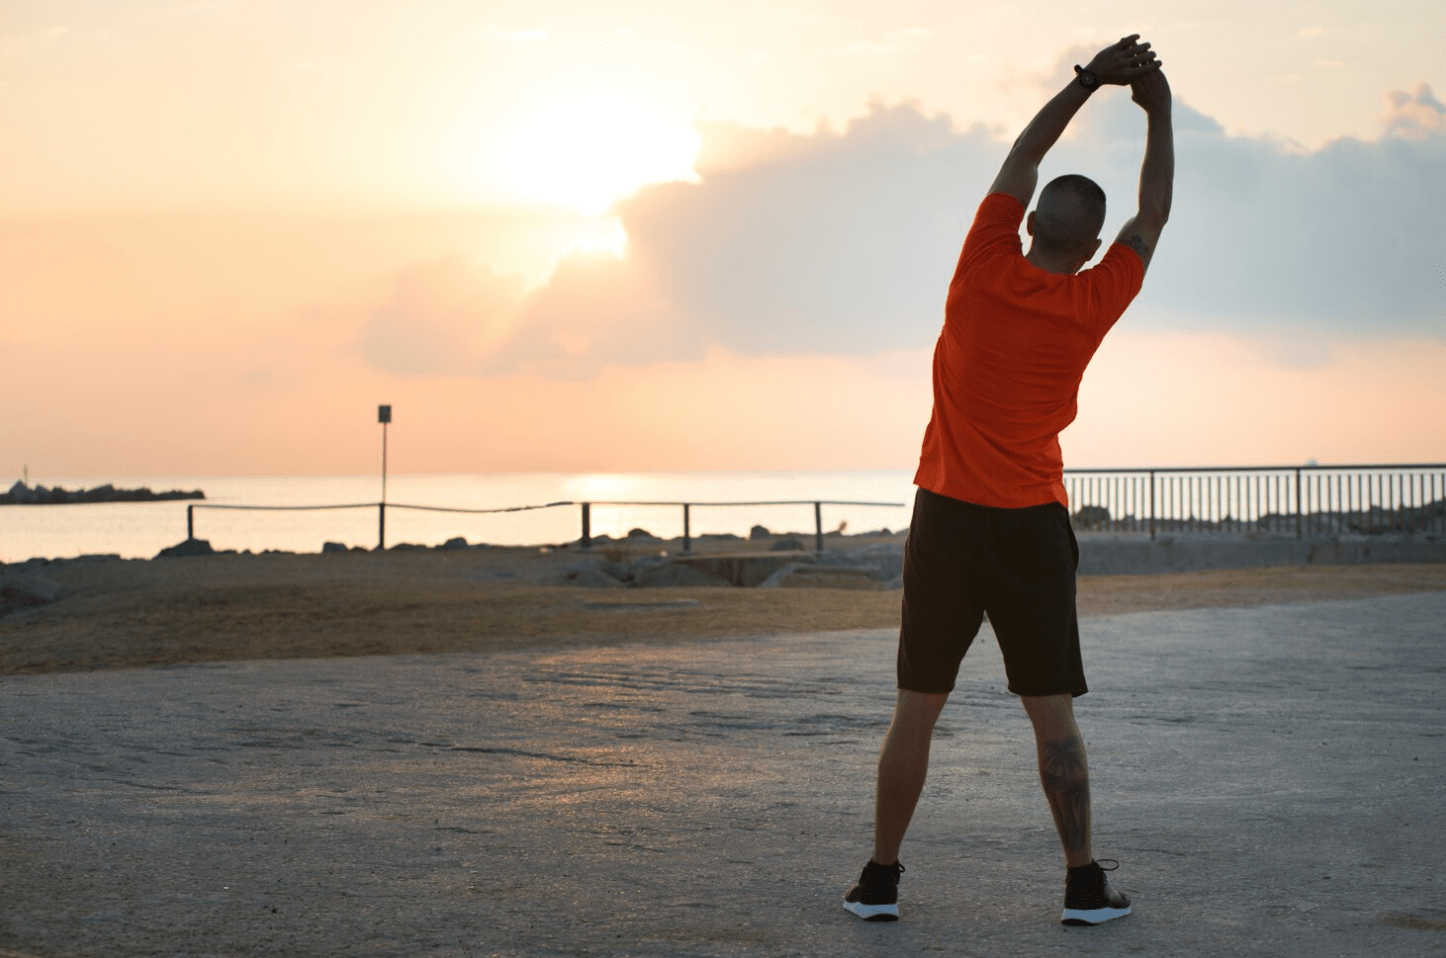 Light Back Exercises, an active lifestyle to treat degenerative disc disease